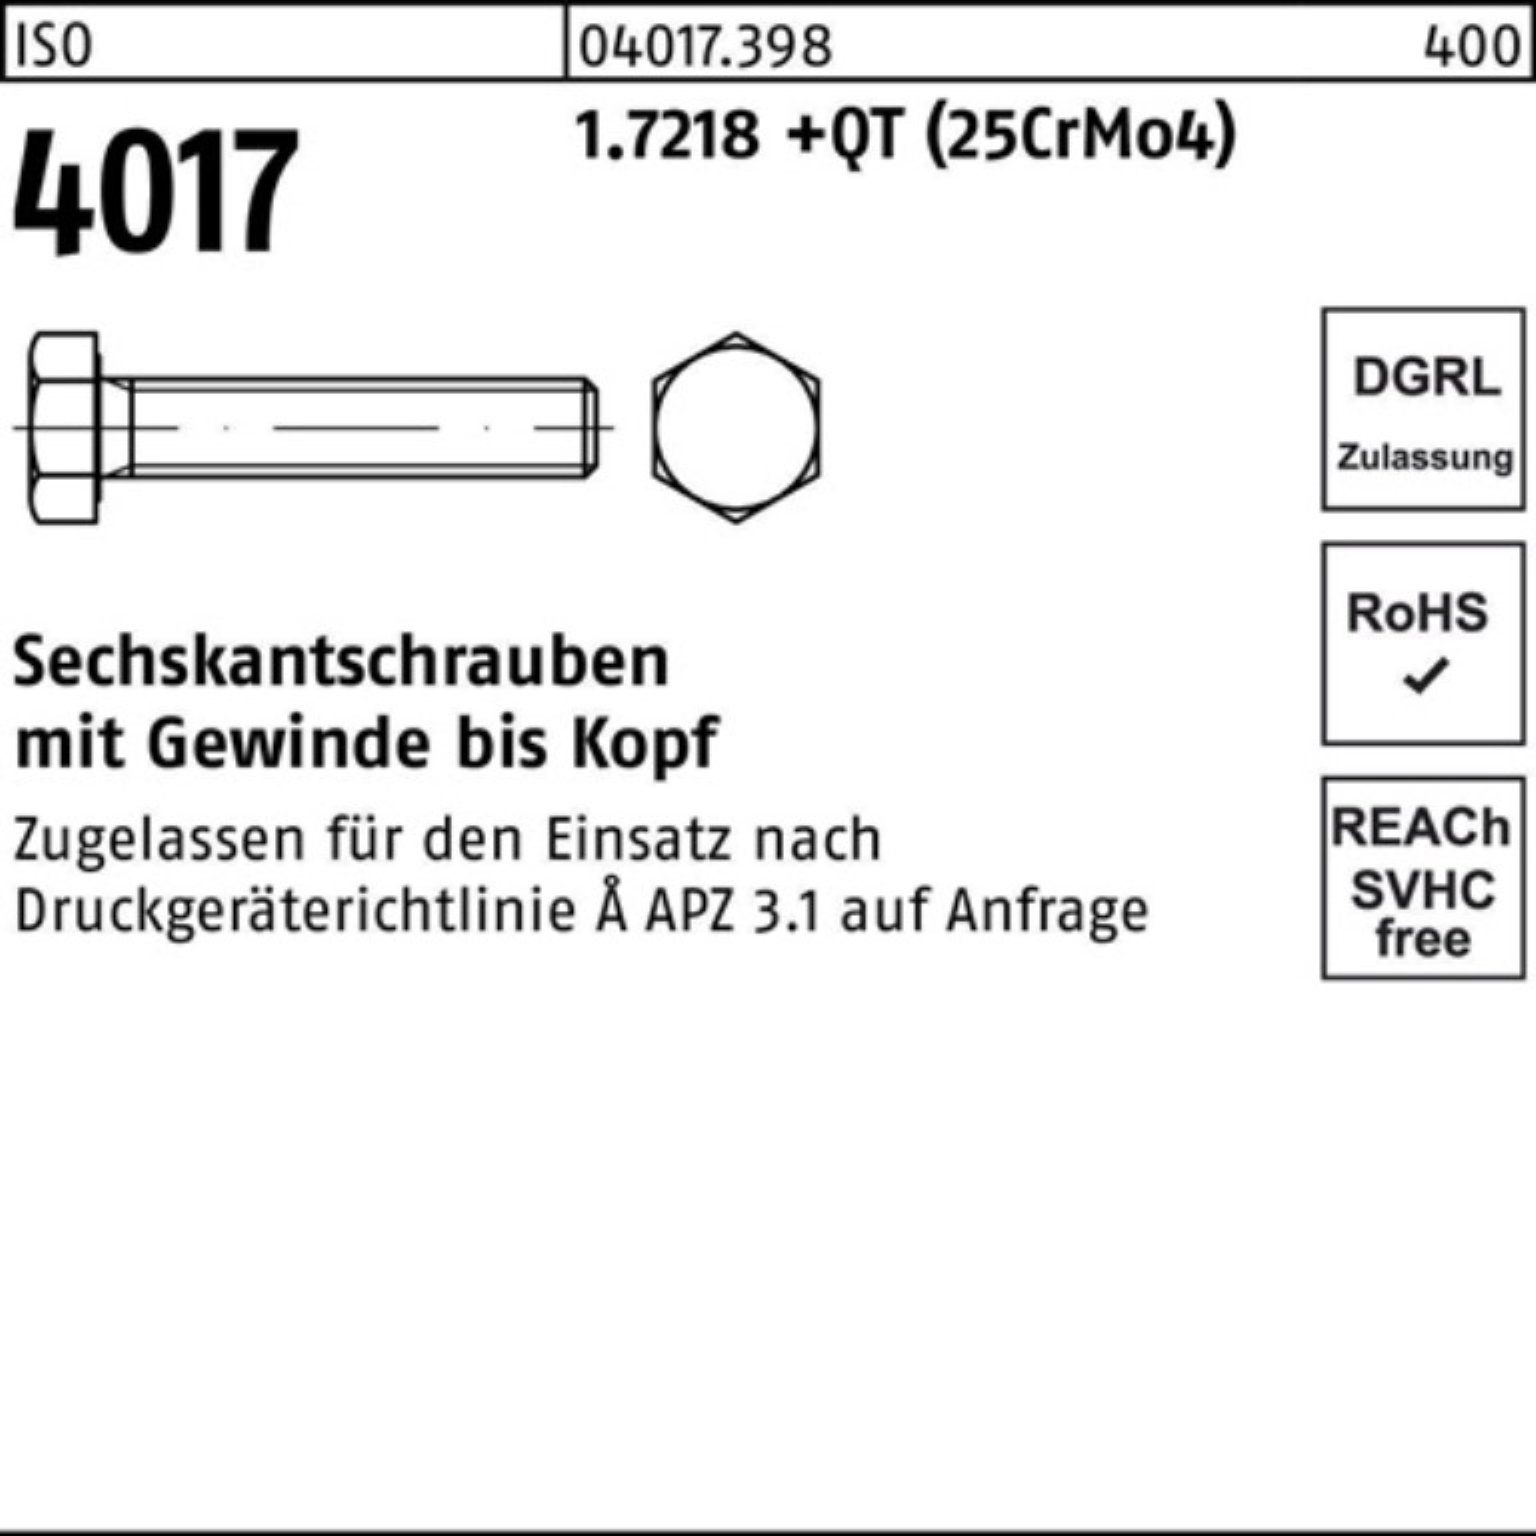 100er ISO 1.7218 Sechskantschraube Sechskantschraube VG +QT 130 Bufab Pack 4017 M36x (25CrMo4)